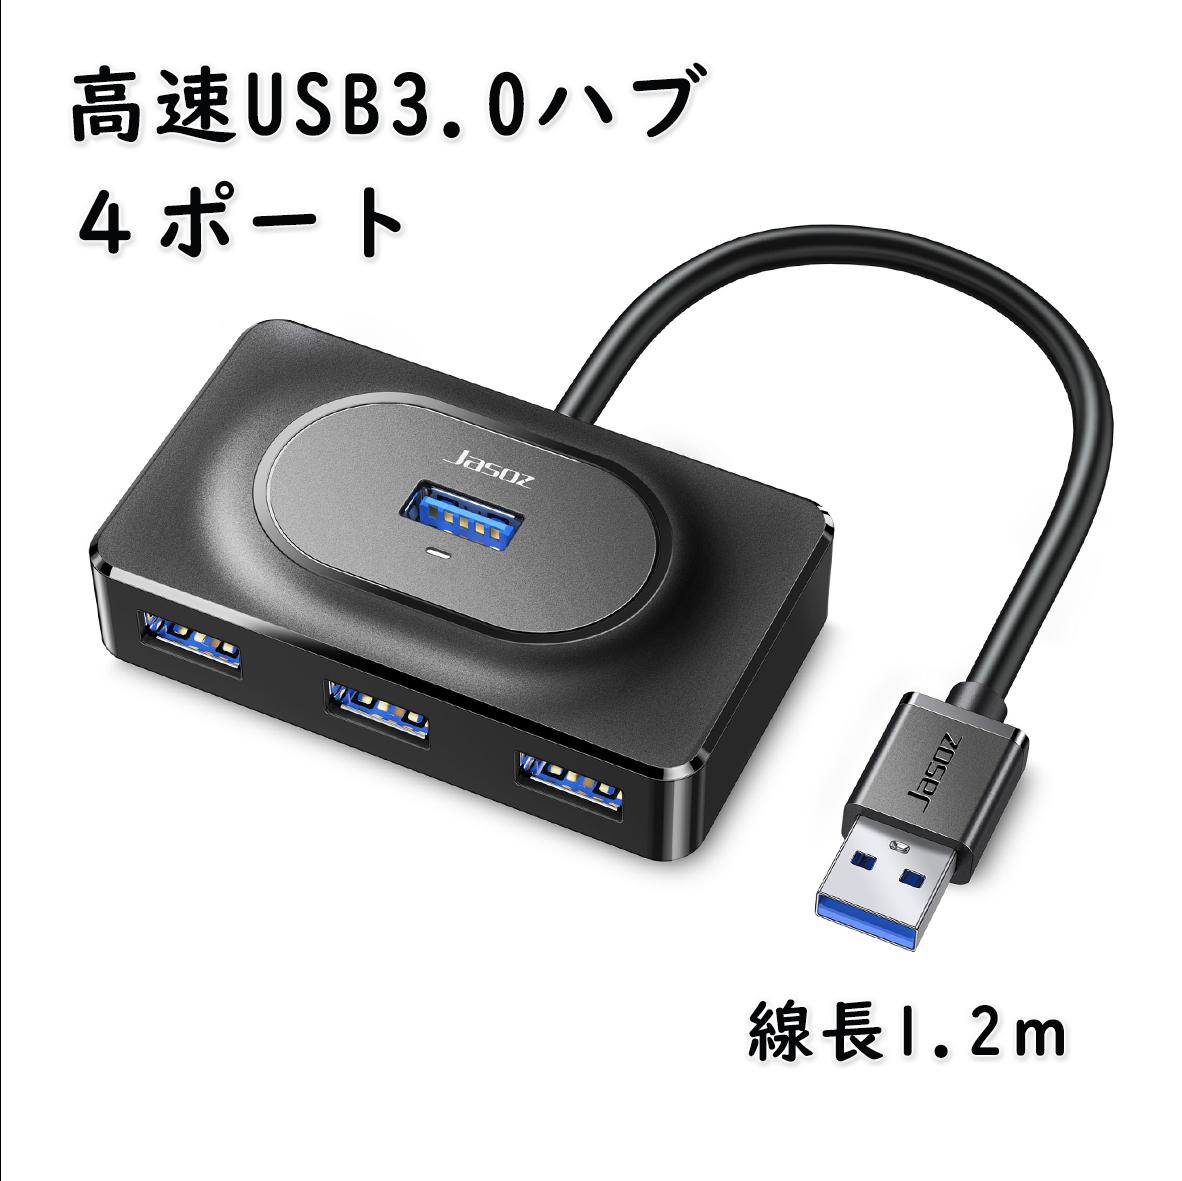 USB3.0 ハブ 4ポート 高速USB3.0 拡張USB Hub 線長1.2m コンパクト 軽量設計 バスパワー 高速変換アダプター 拡張 PS4対応 PC Windows/Linux/Mac